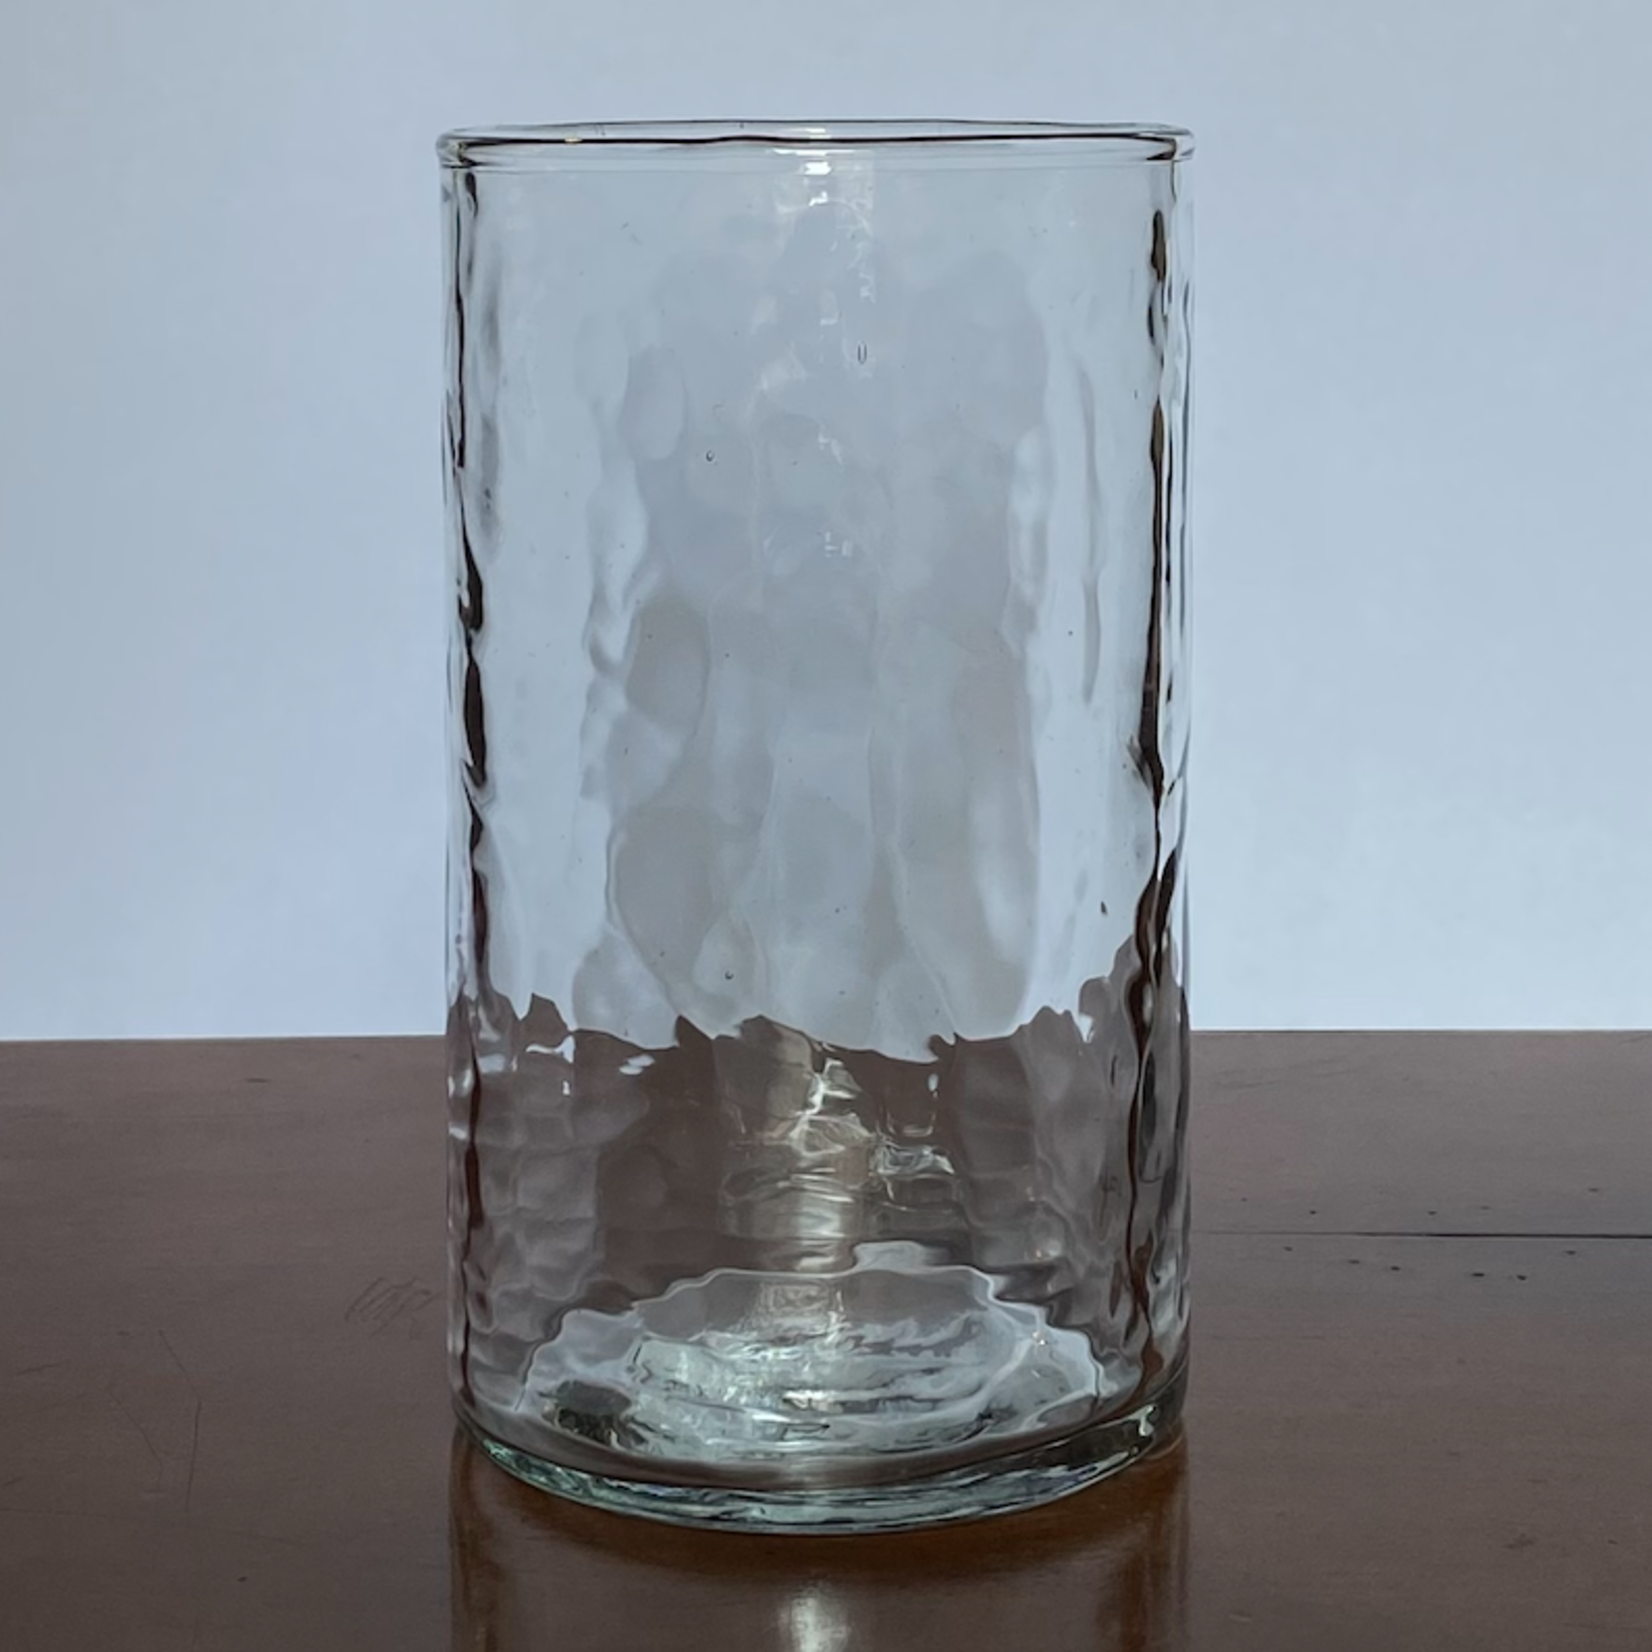 CHEHOMA HAMMERED GLASS TUMBLER LAVANDOU